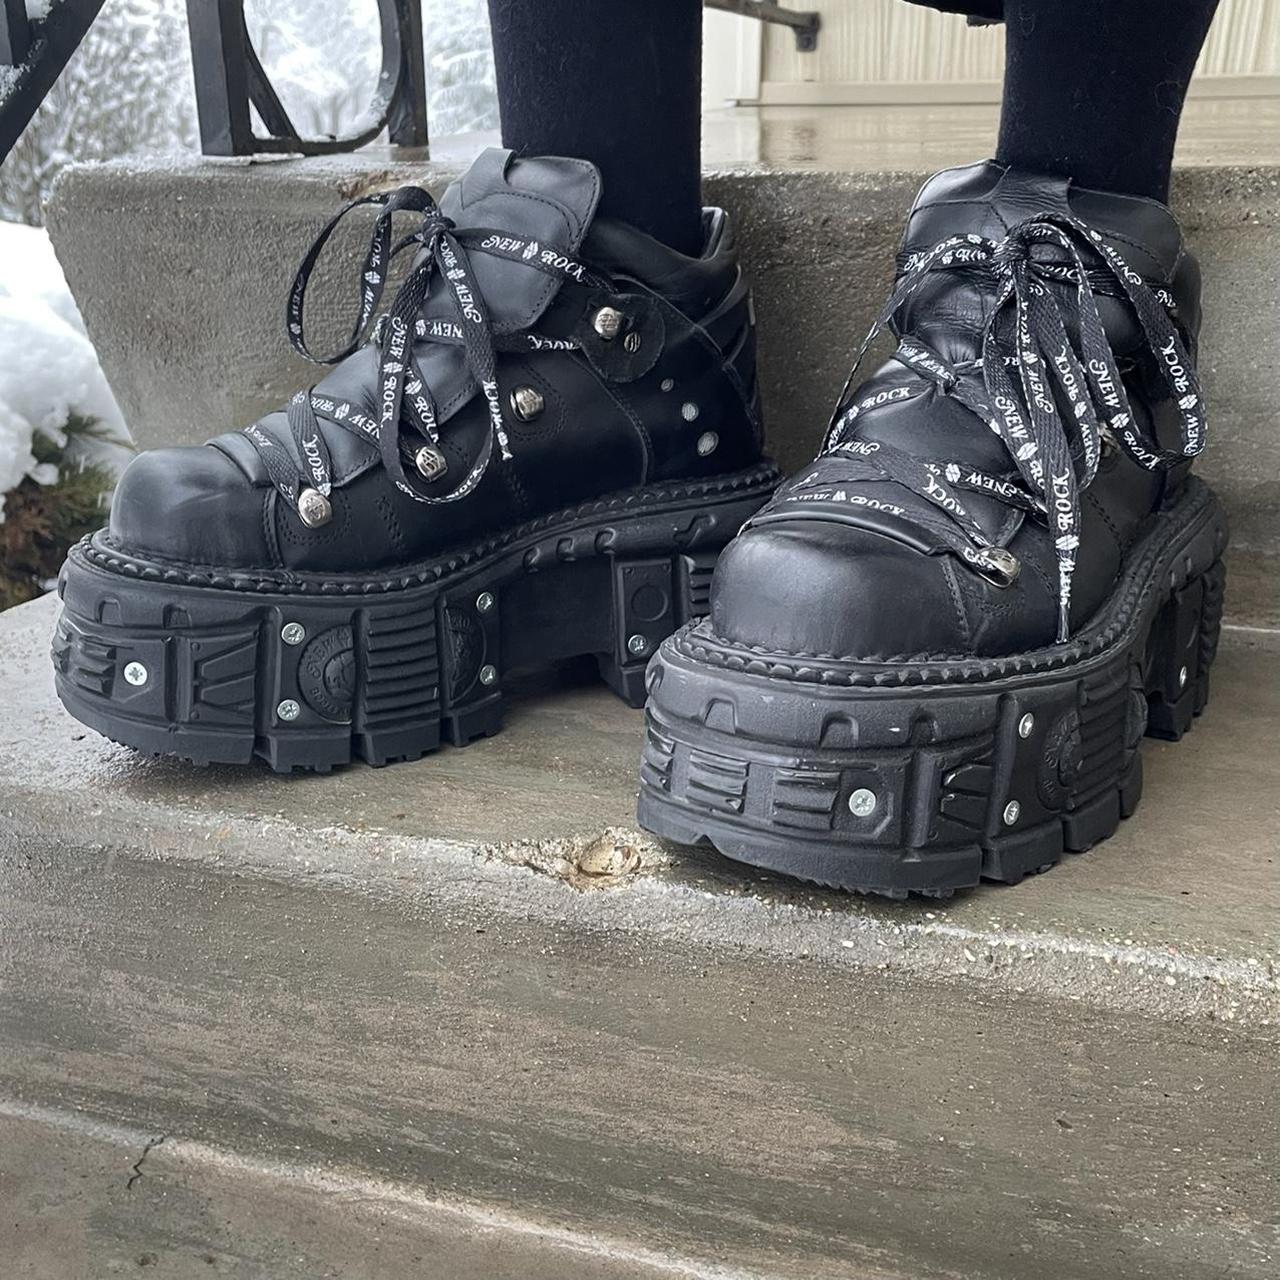 New Rock Women's Black Boots | Depop